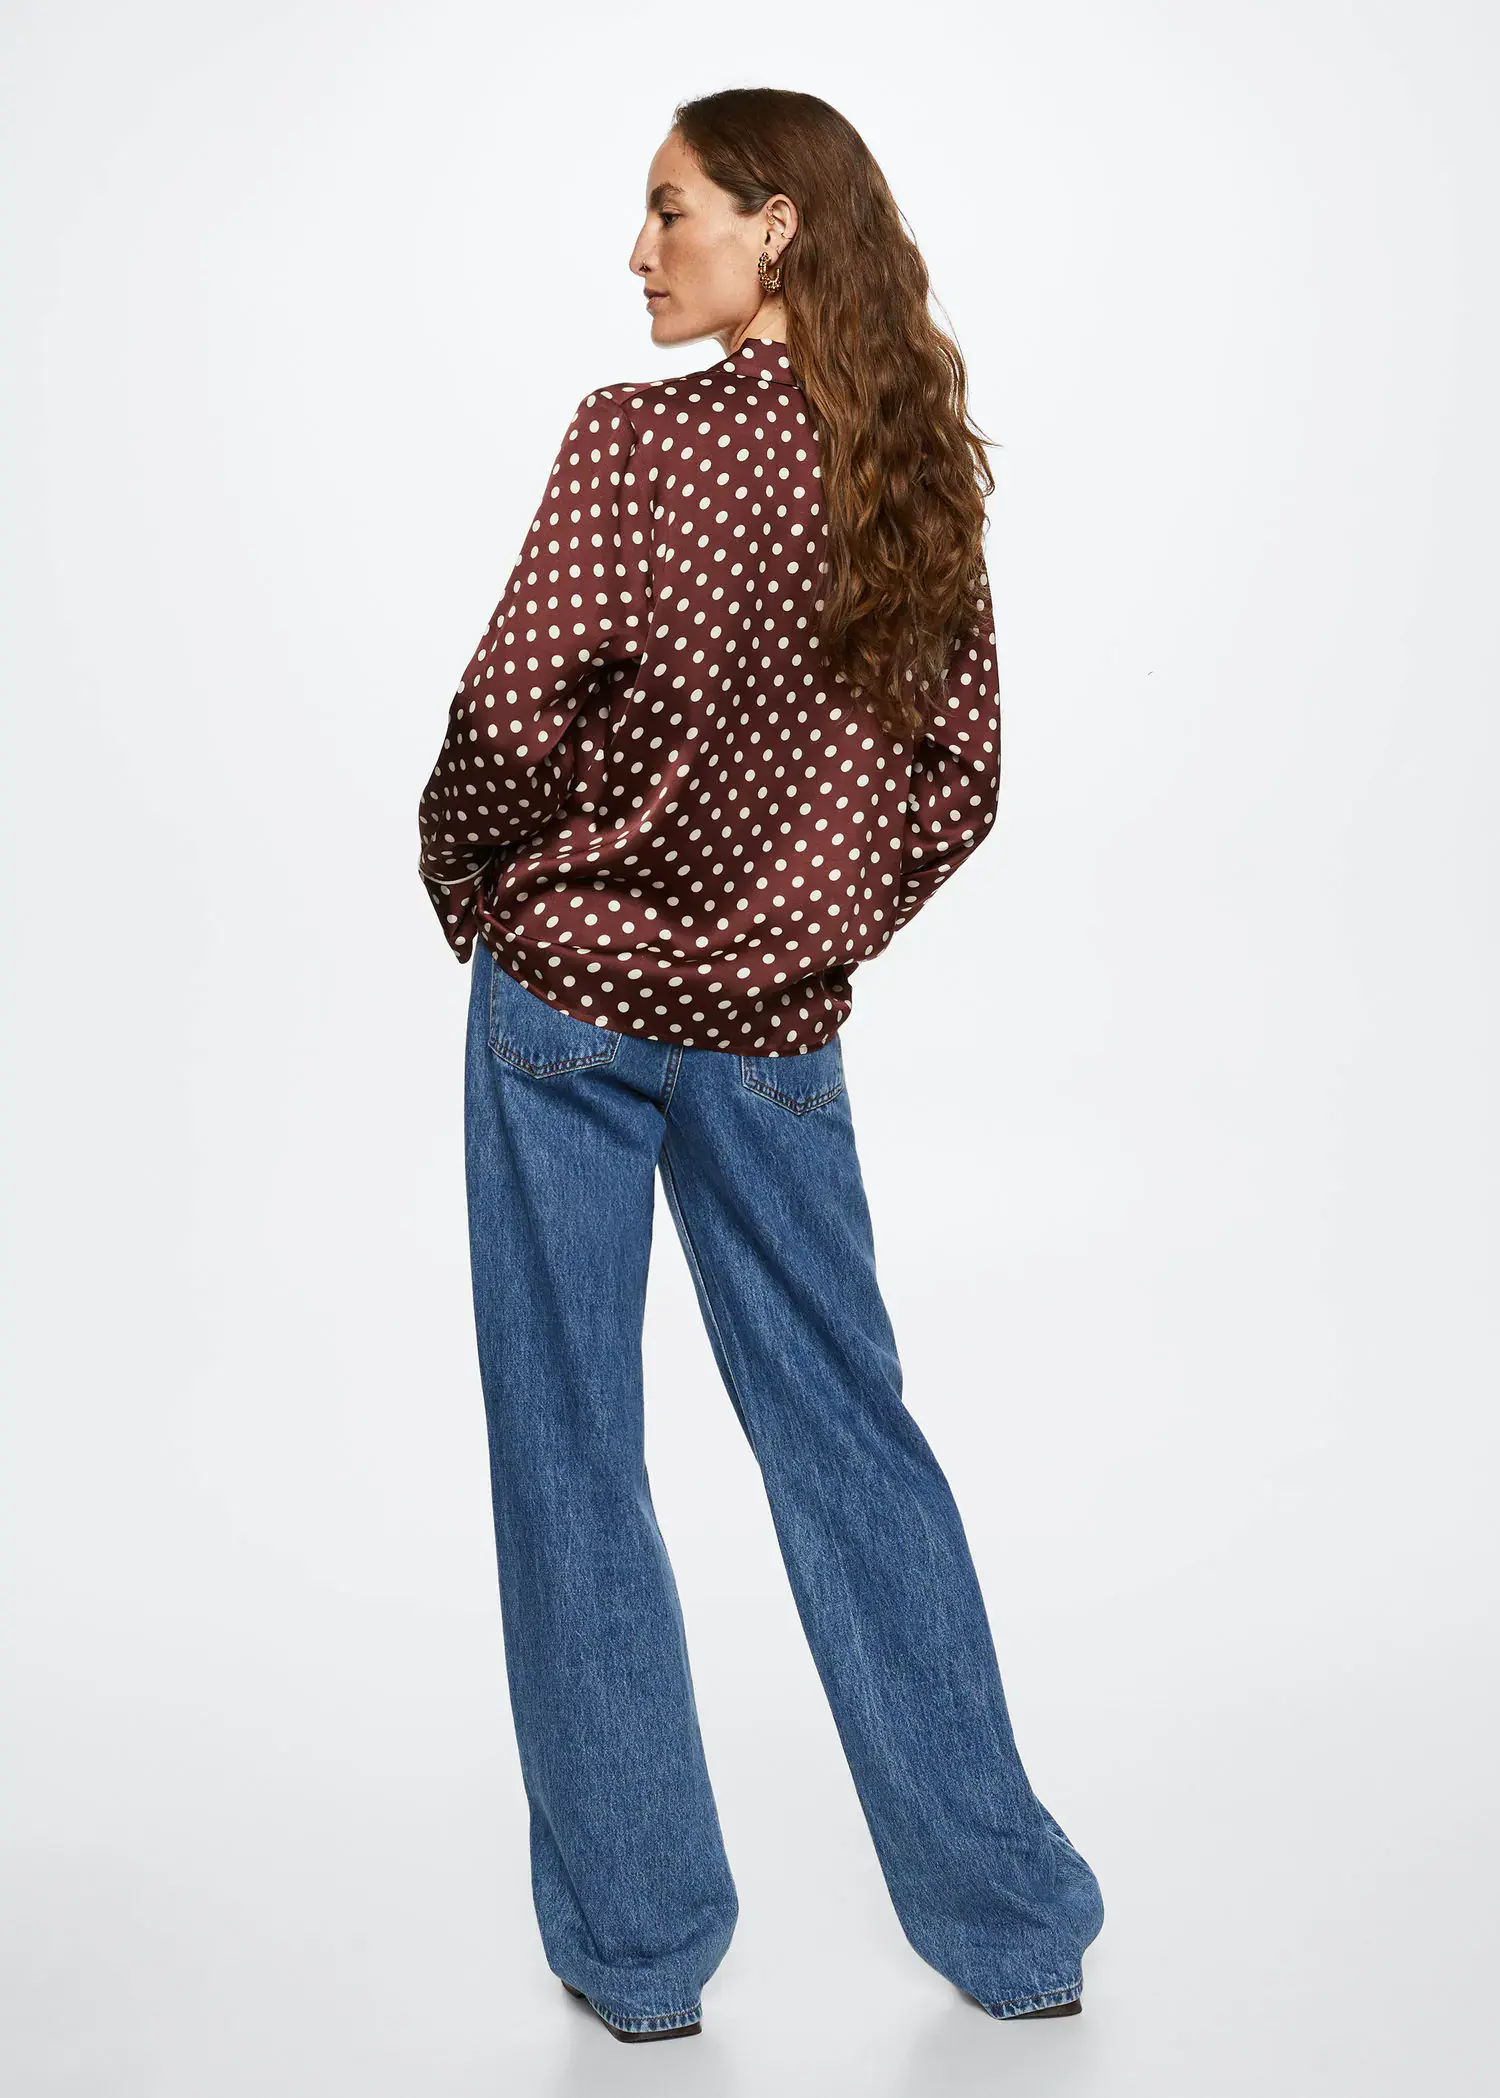 Mango Polka-dot satin-finish shirt. a woman wearing jeans and a polka dot shirt. 